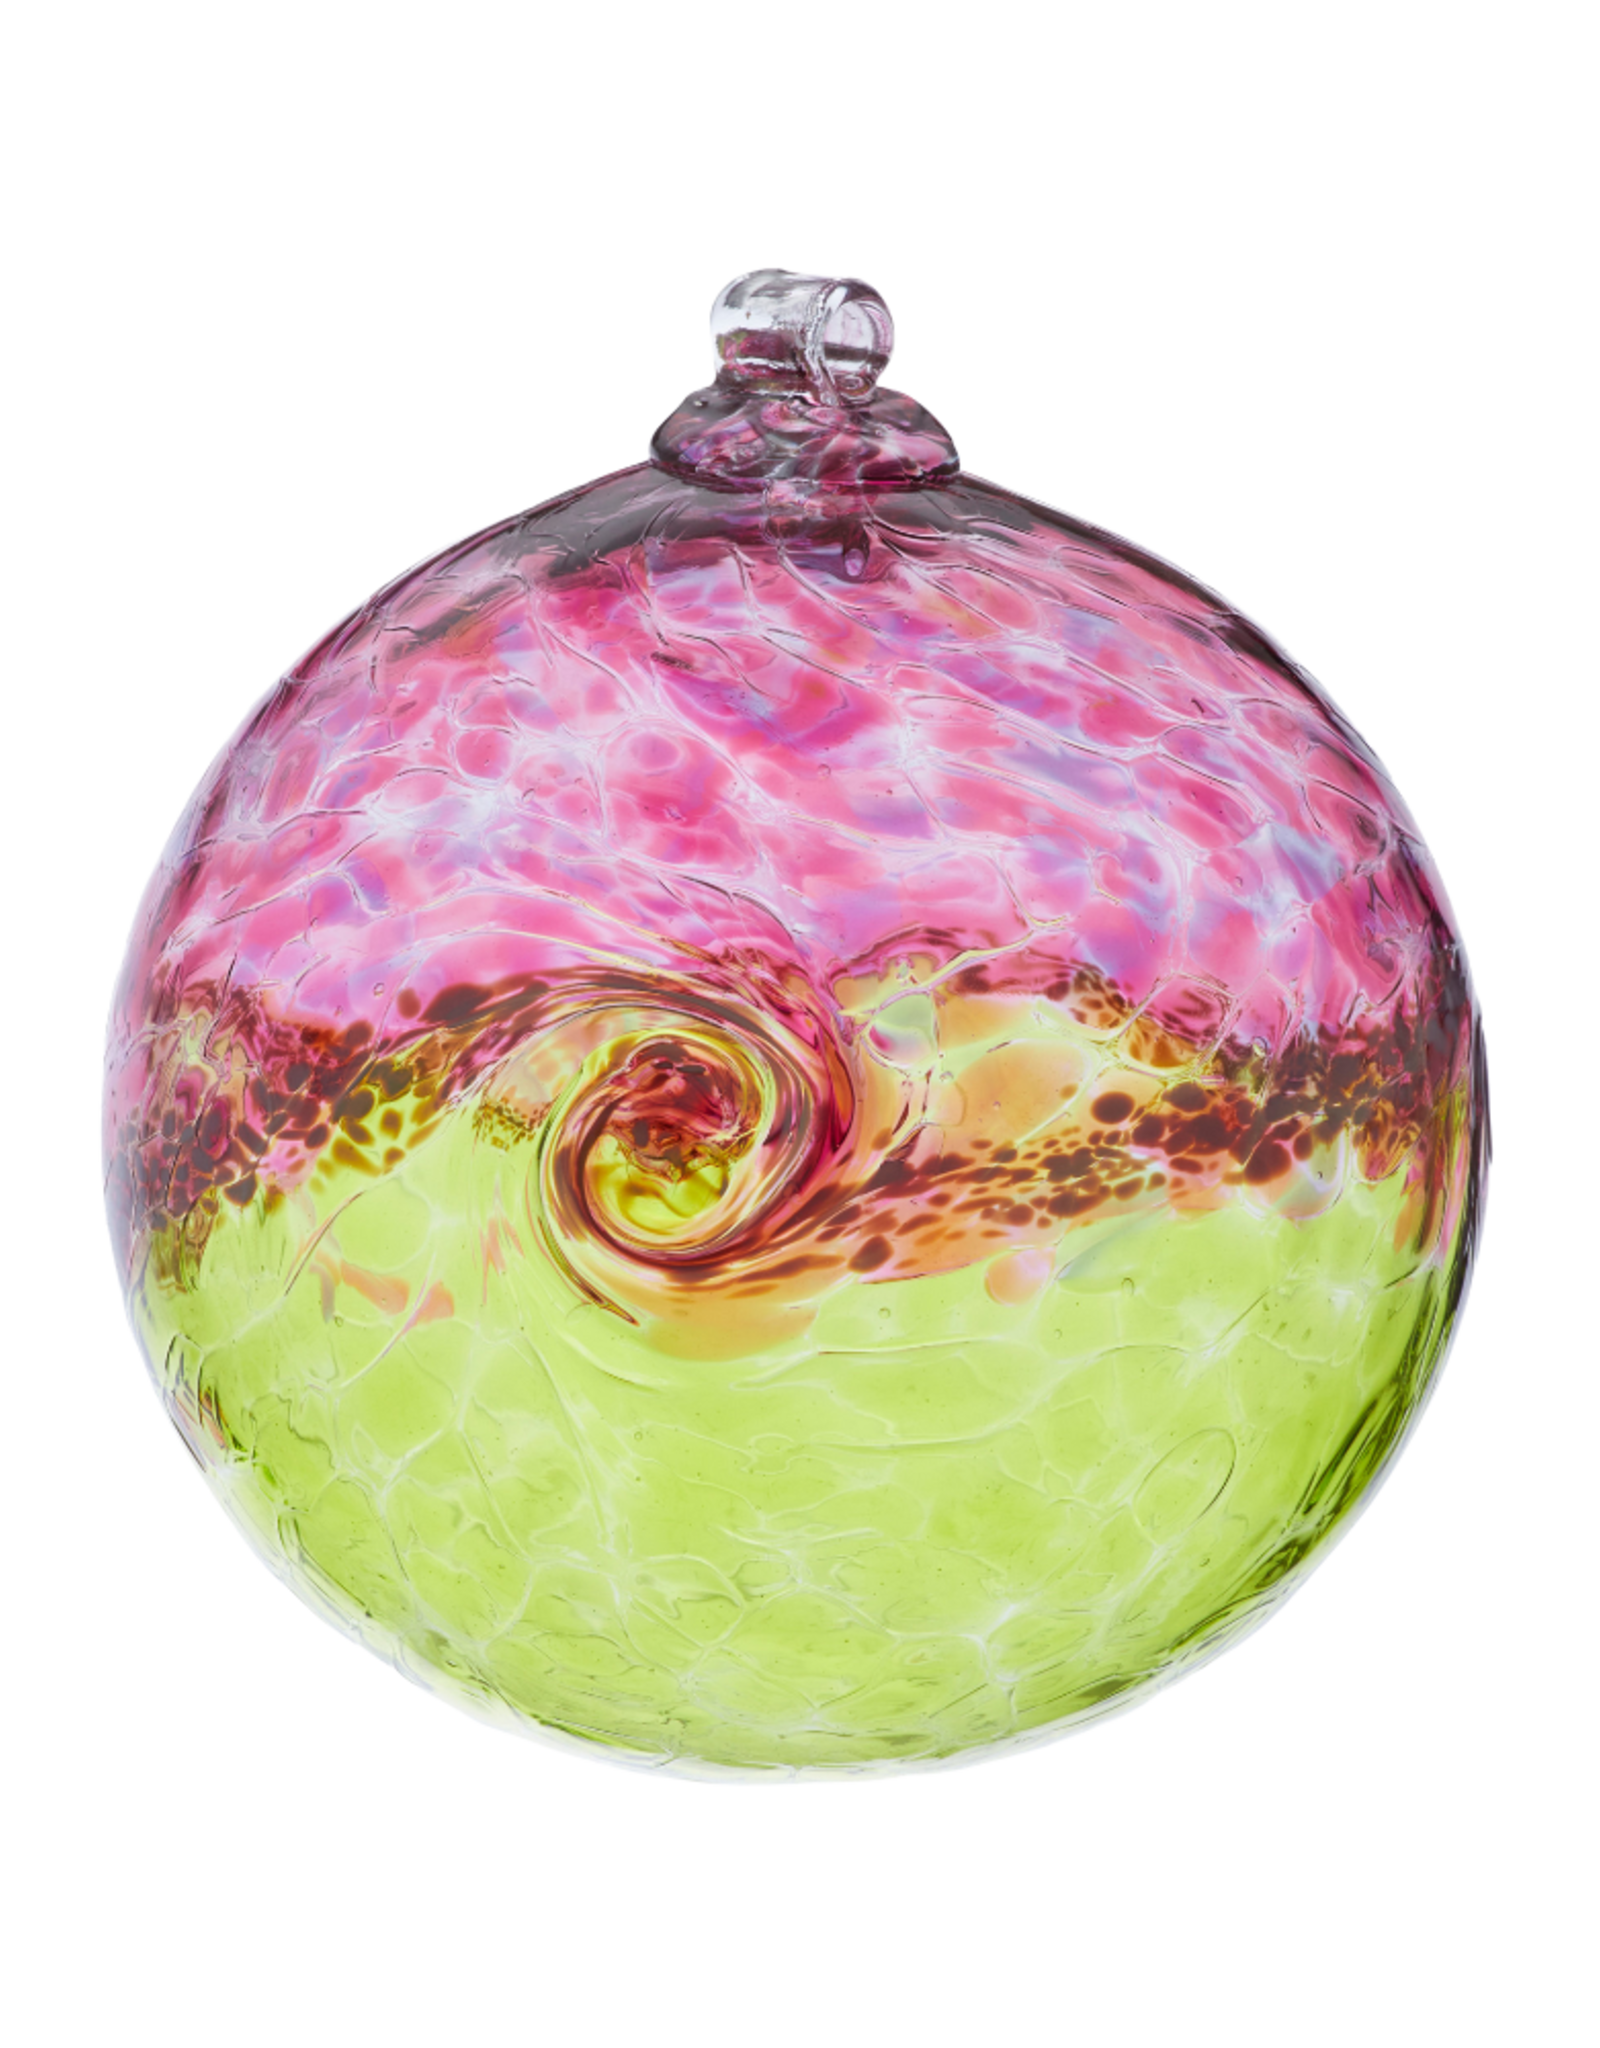 Kitras Art Glass Vanglow Ball 3 inch -